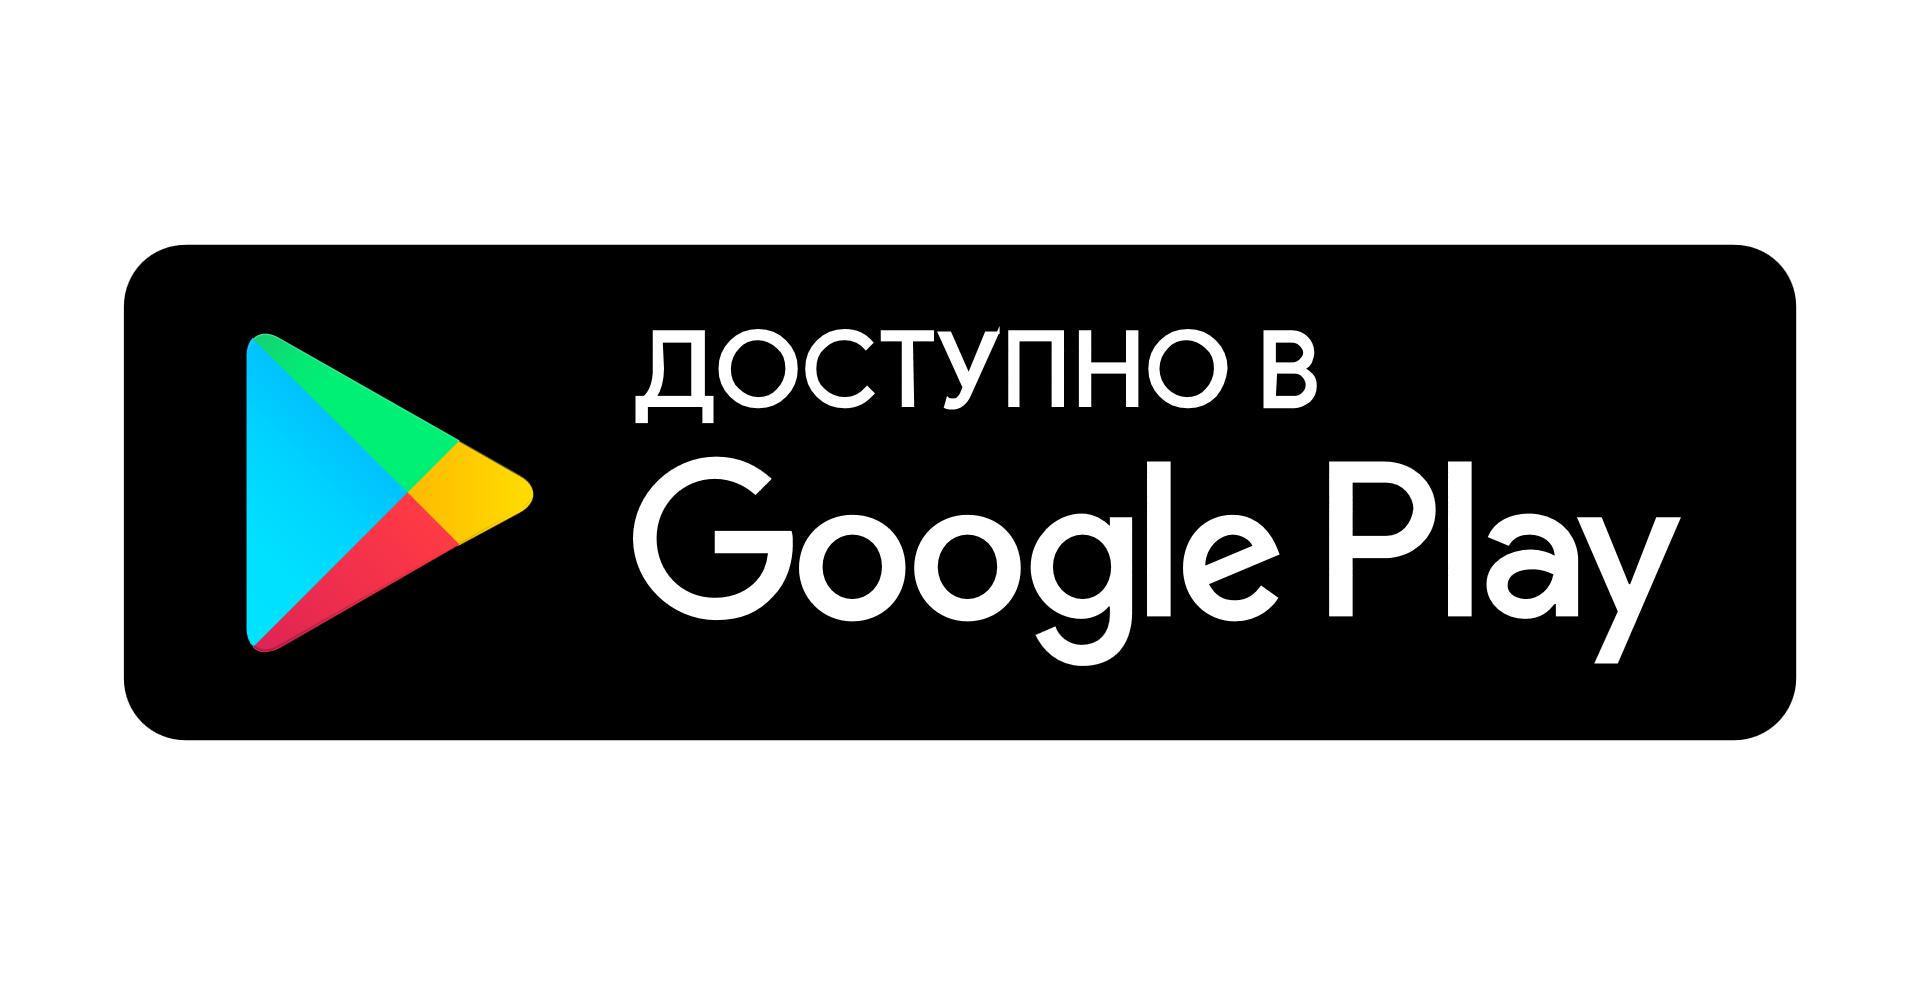 Гугл плей. Логотип Google Play. Доступно в гугл плей. Доступно в гугл плей иконка. Перейти в google play